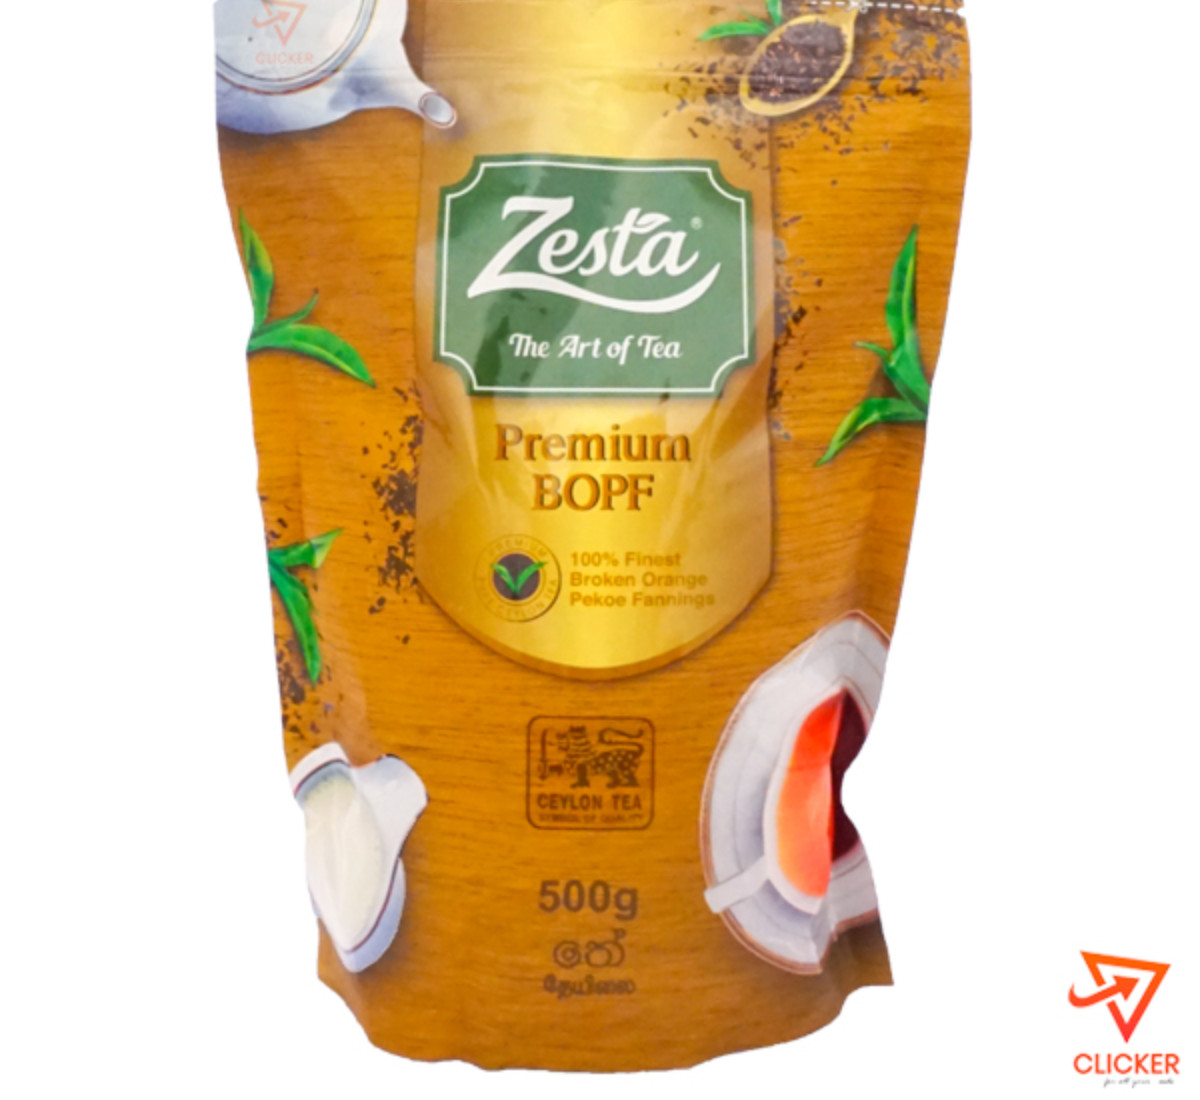 Clicker product 500g ZESTA Tea 913